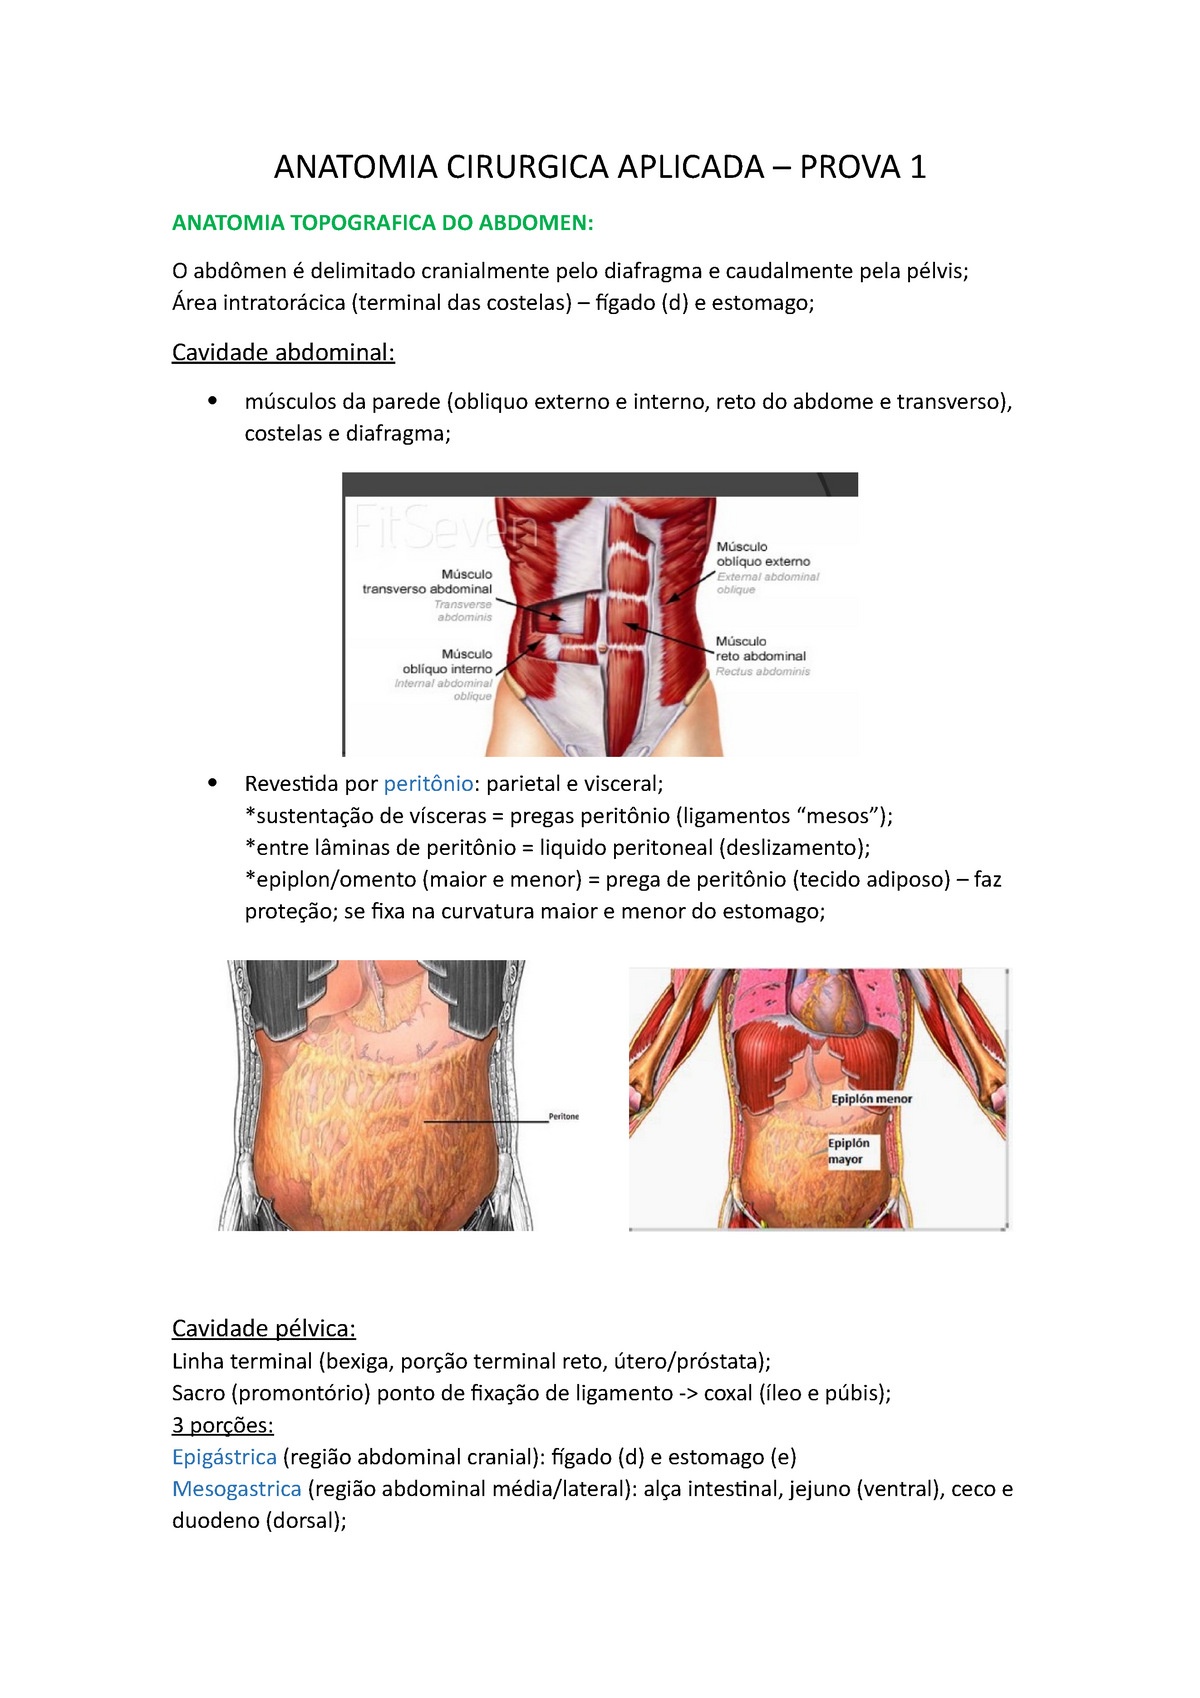 Anatomia Cirúrgica do Abdómen